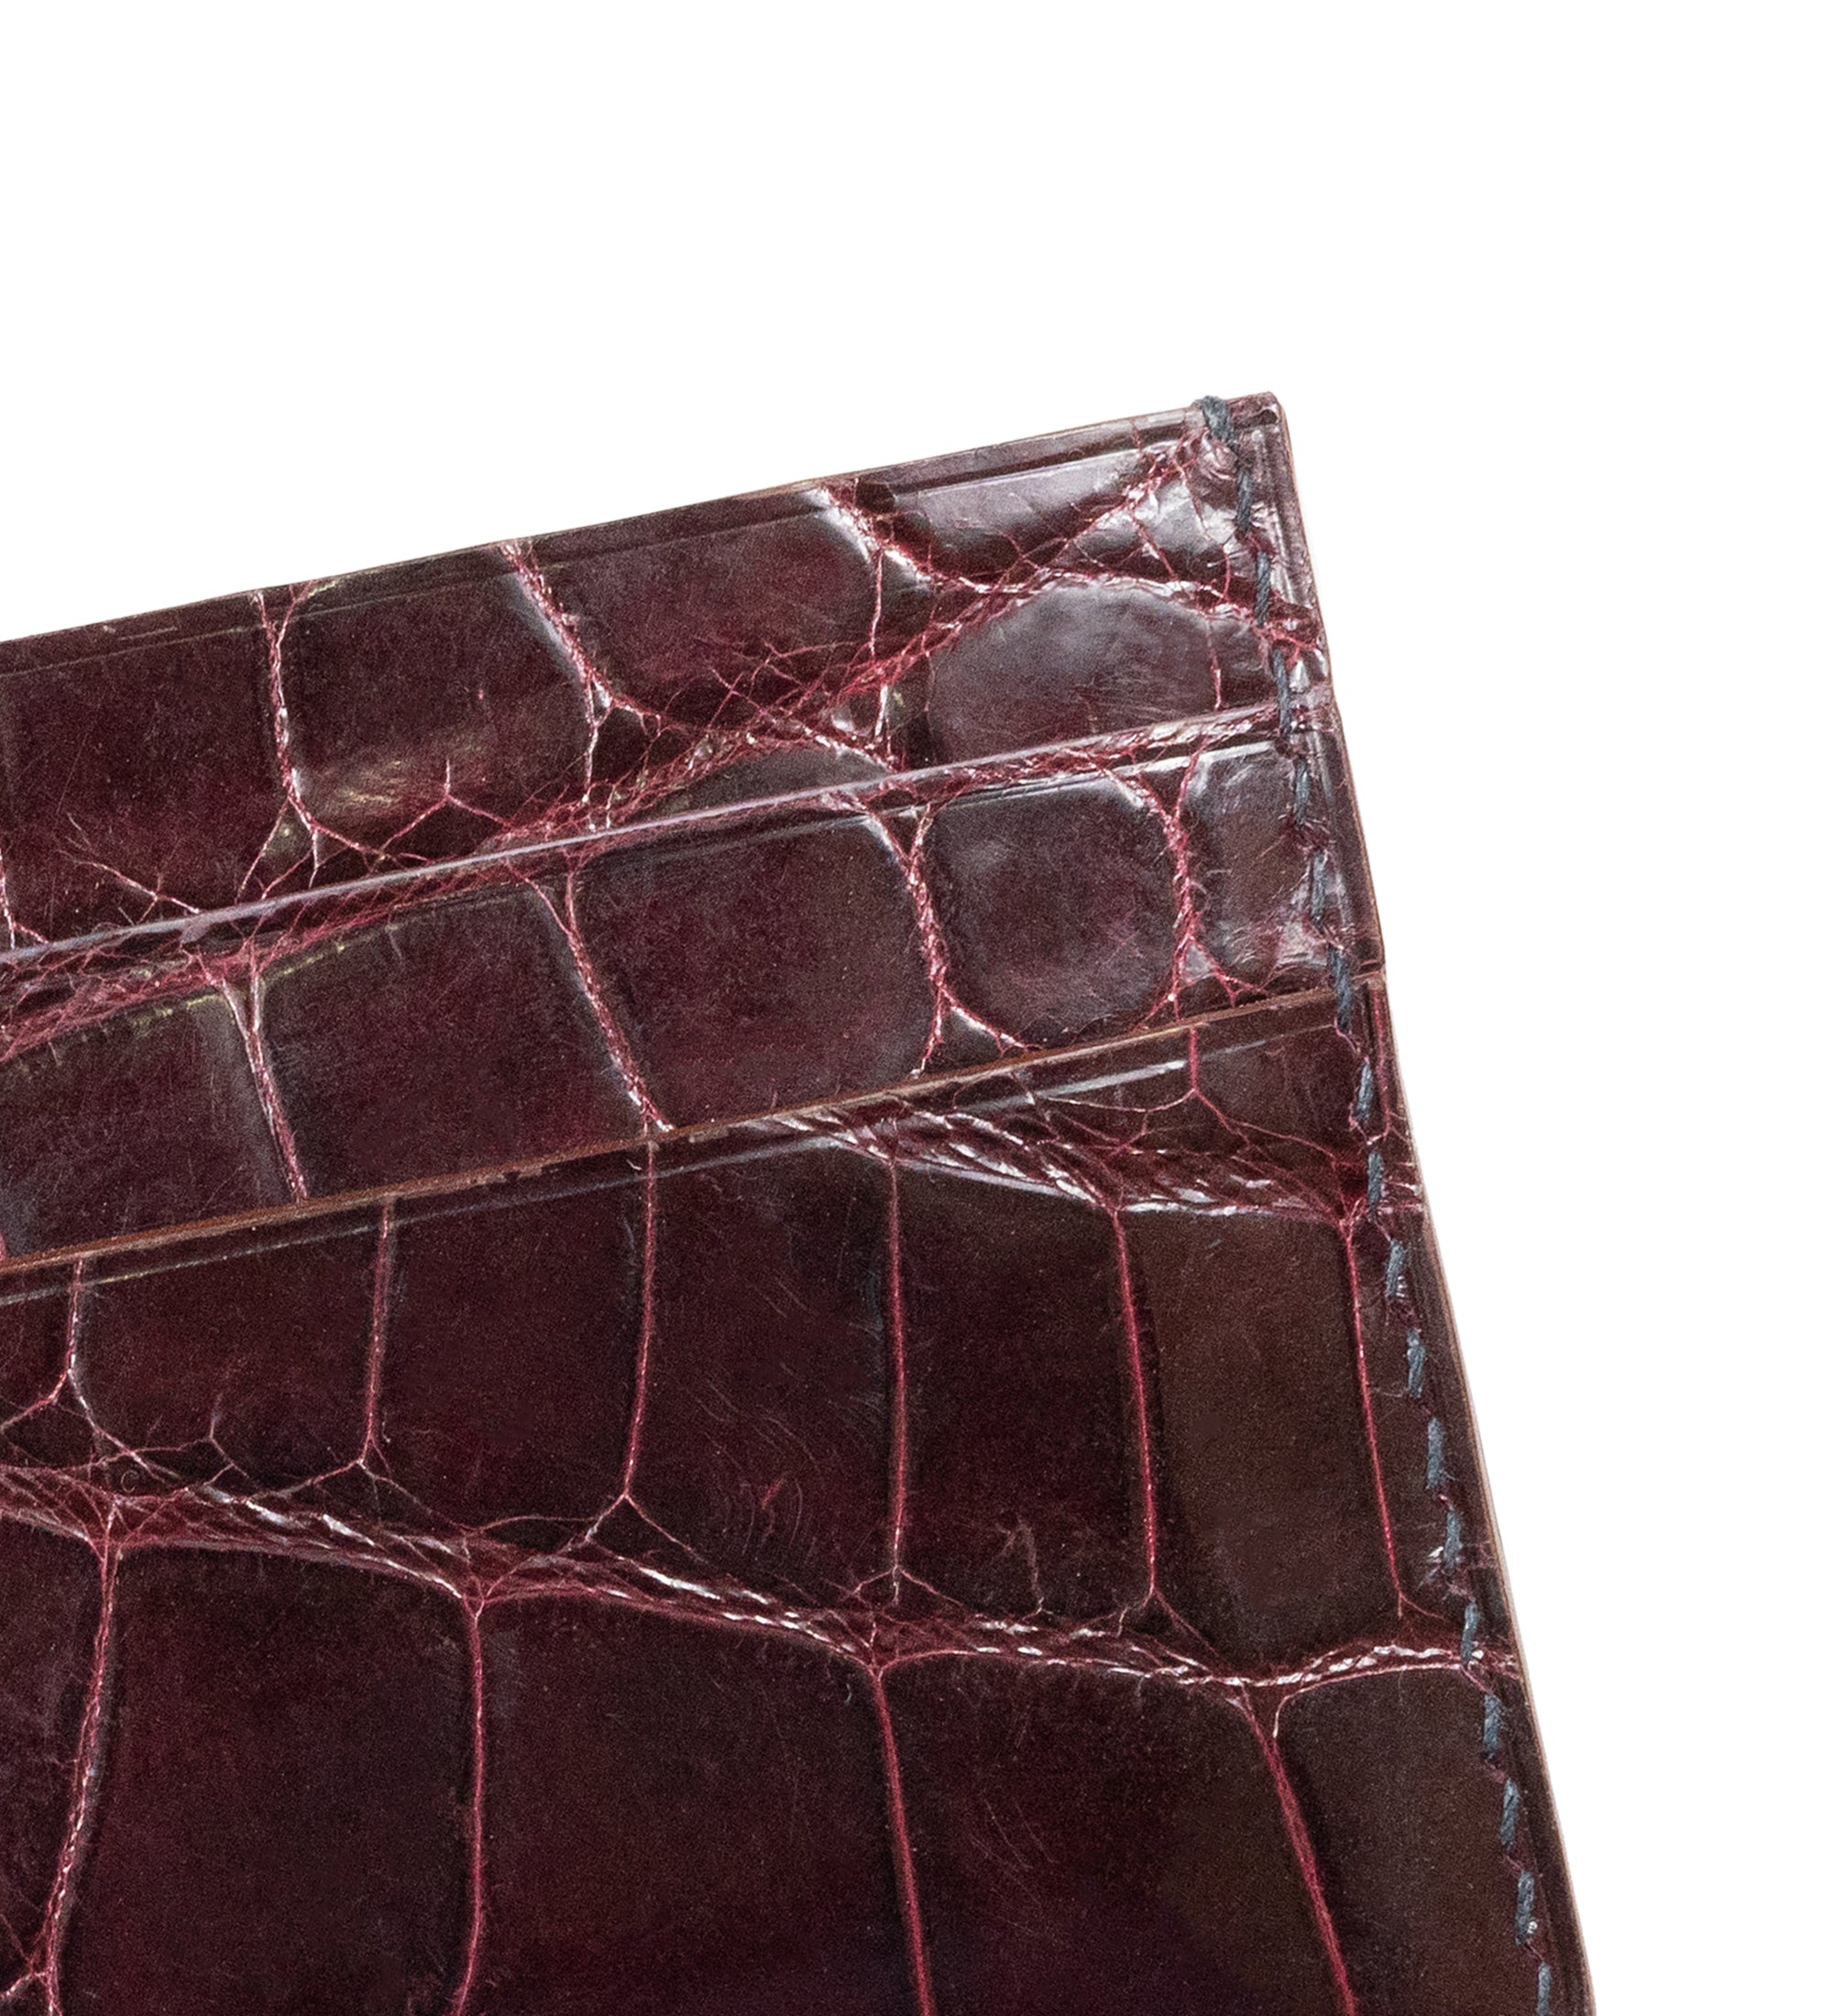 Multi-slot Cardholder, Crocodile Leather in Wine Red